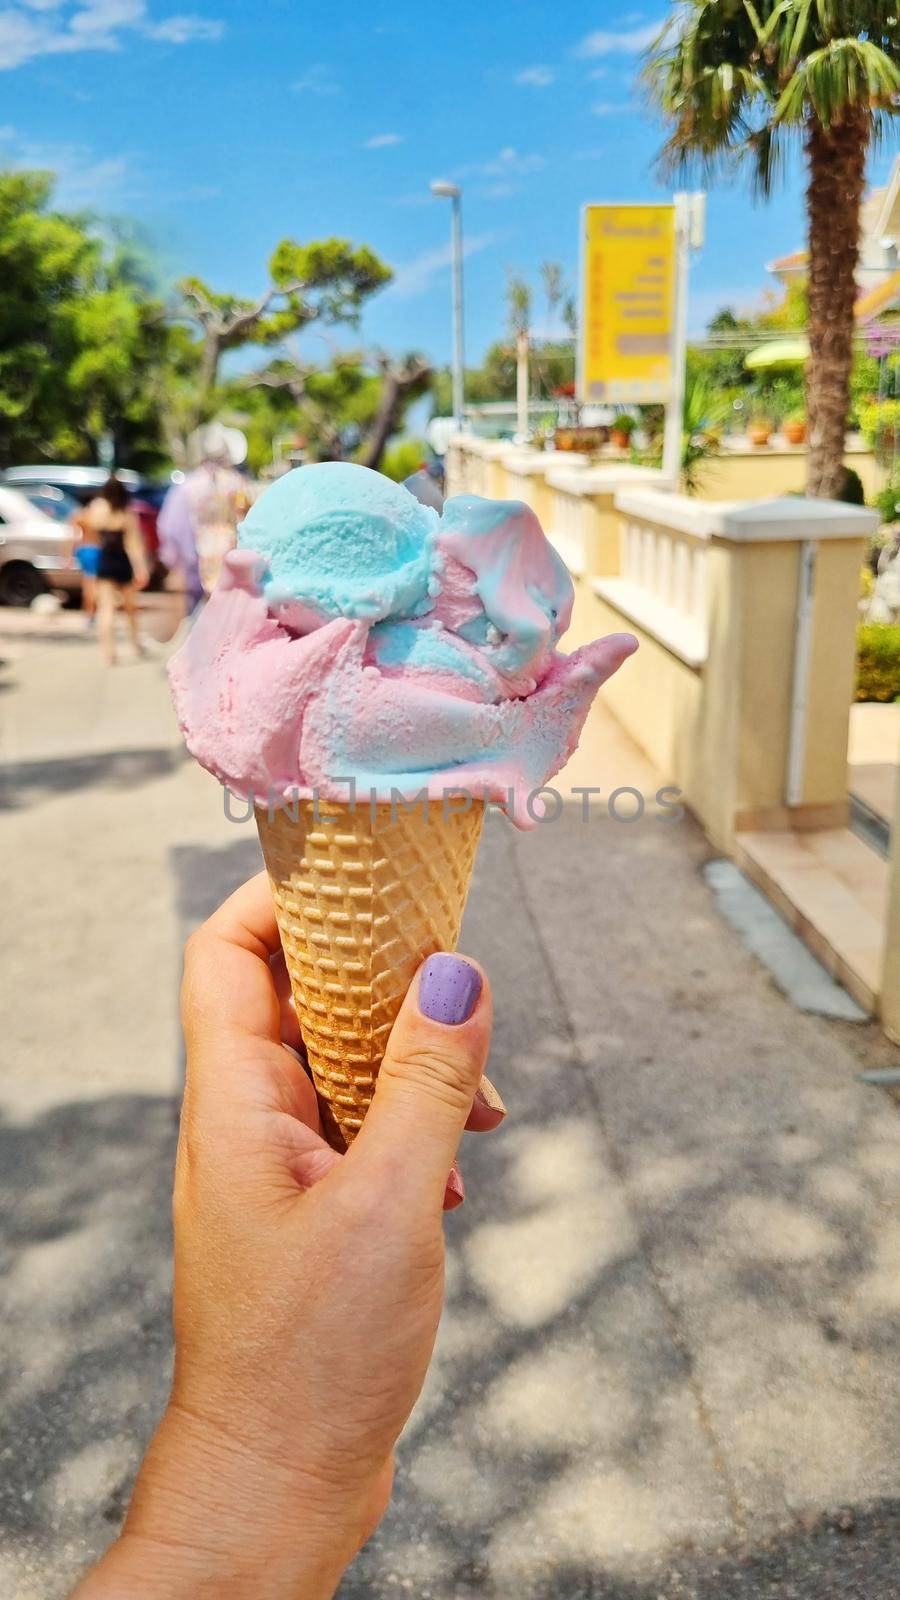 Gelato ice cream cone held up to the hot summer city.